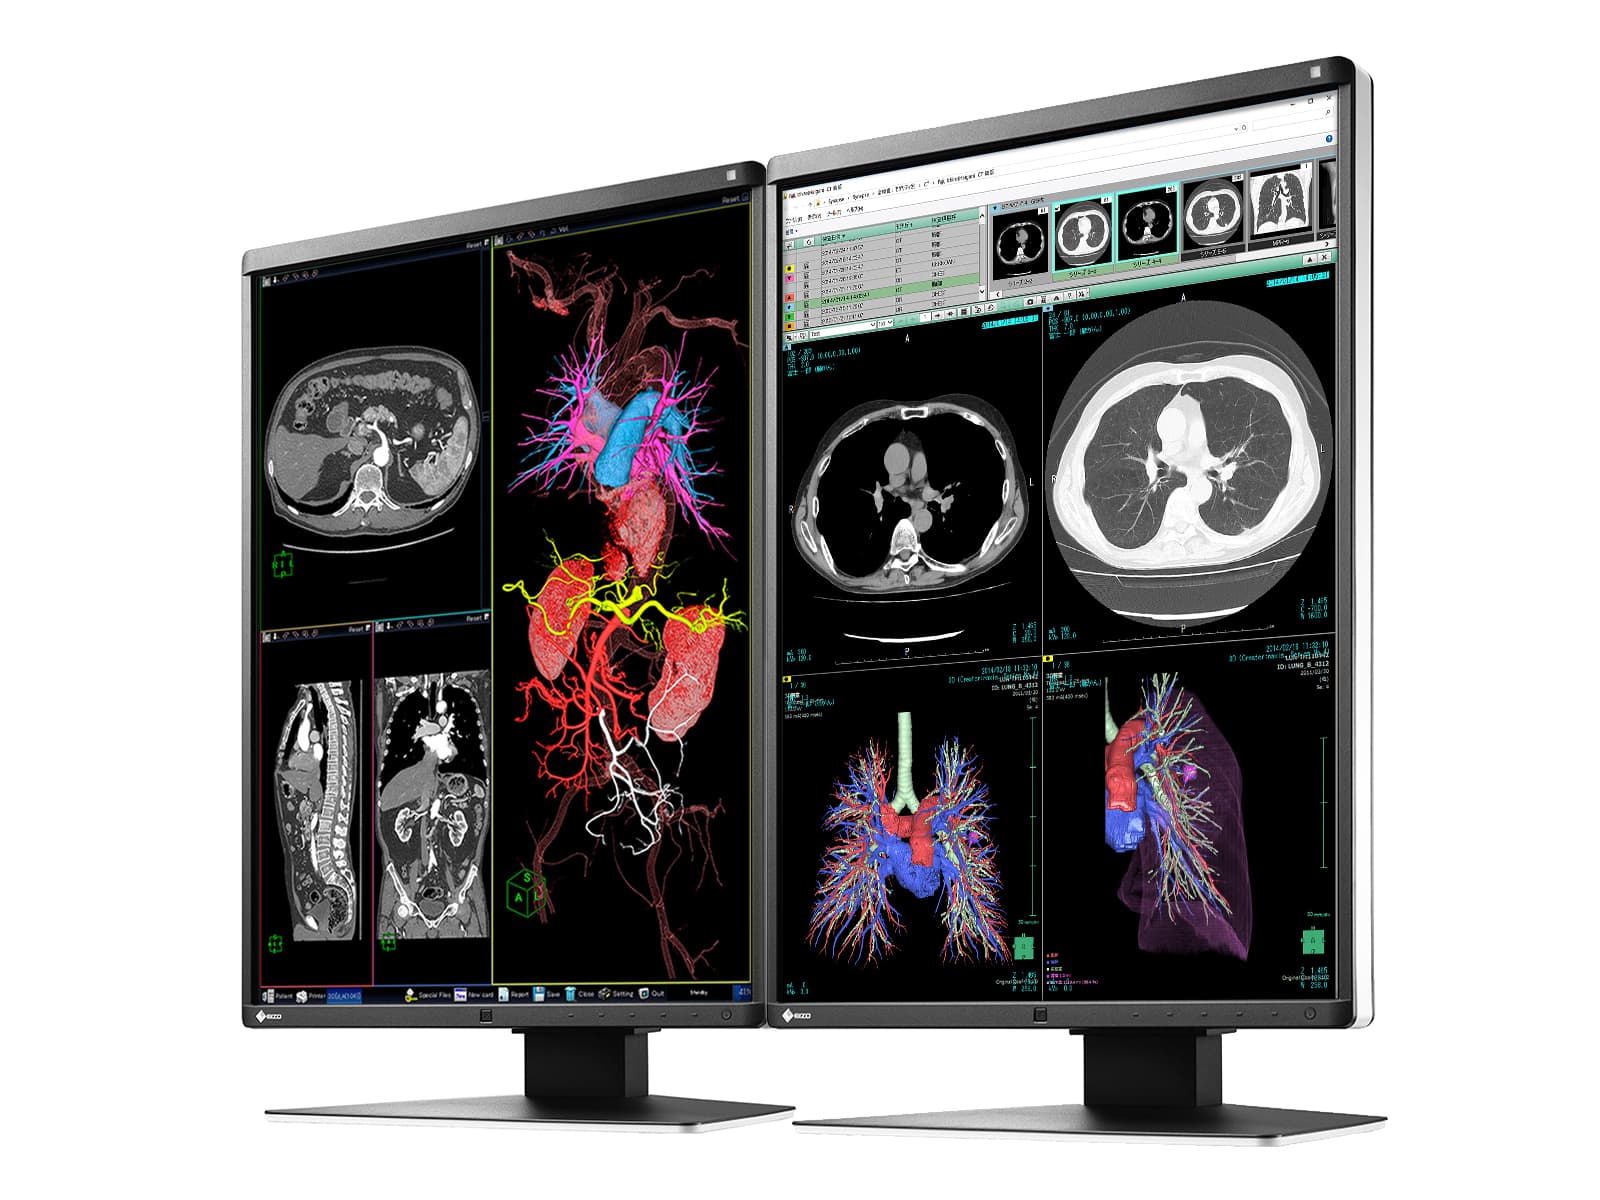 Eizo RadiForce RX360 3MP 21" Color LED General Radiology PACS Display Monitor (RX360) Monitors.com 